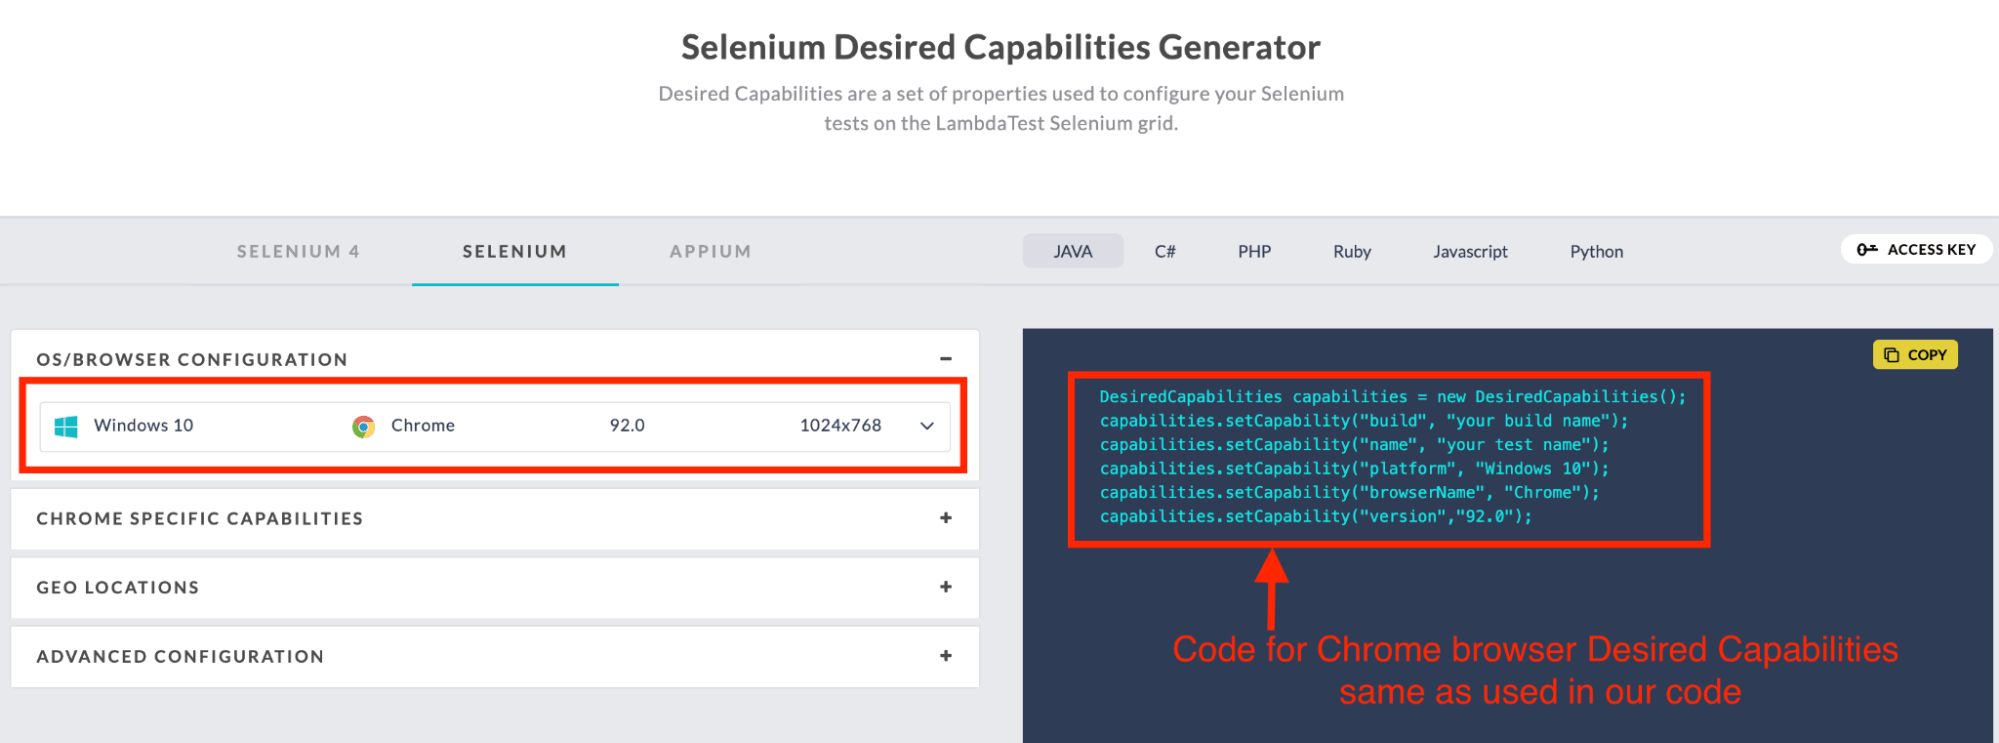 Selenium Desired Capabilities Generator